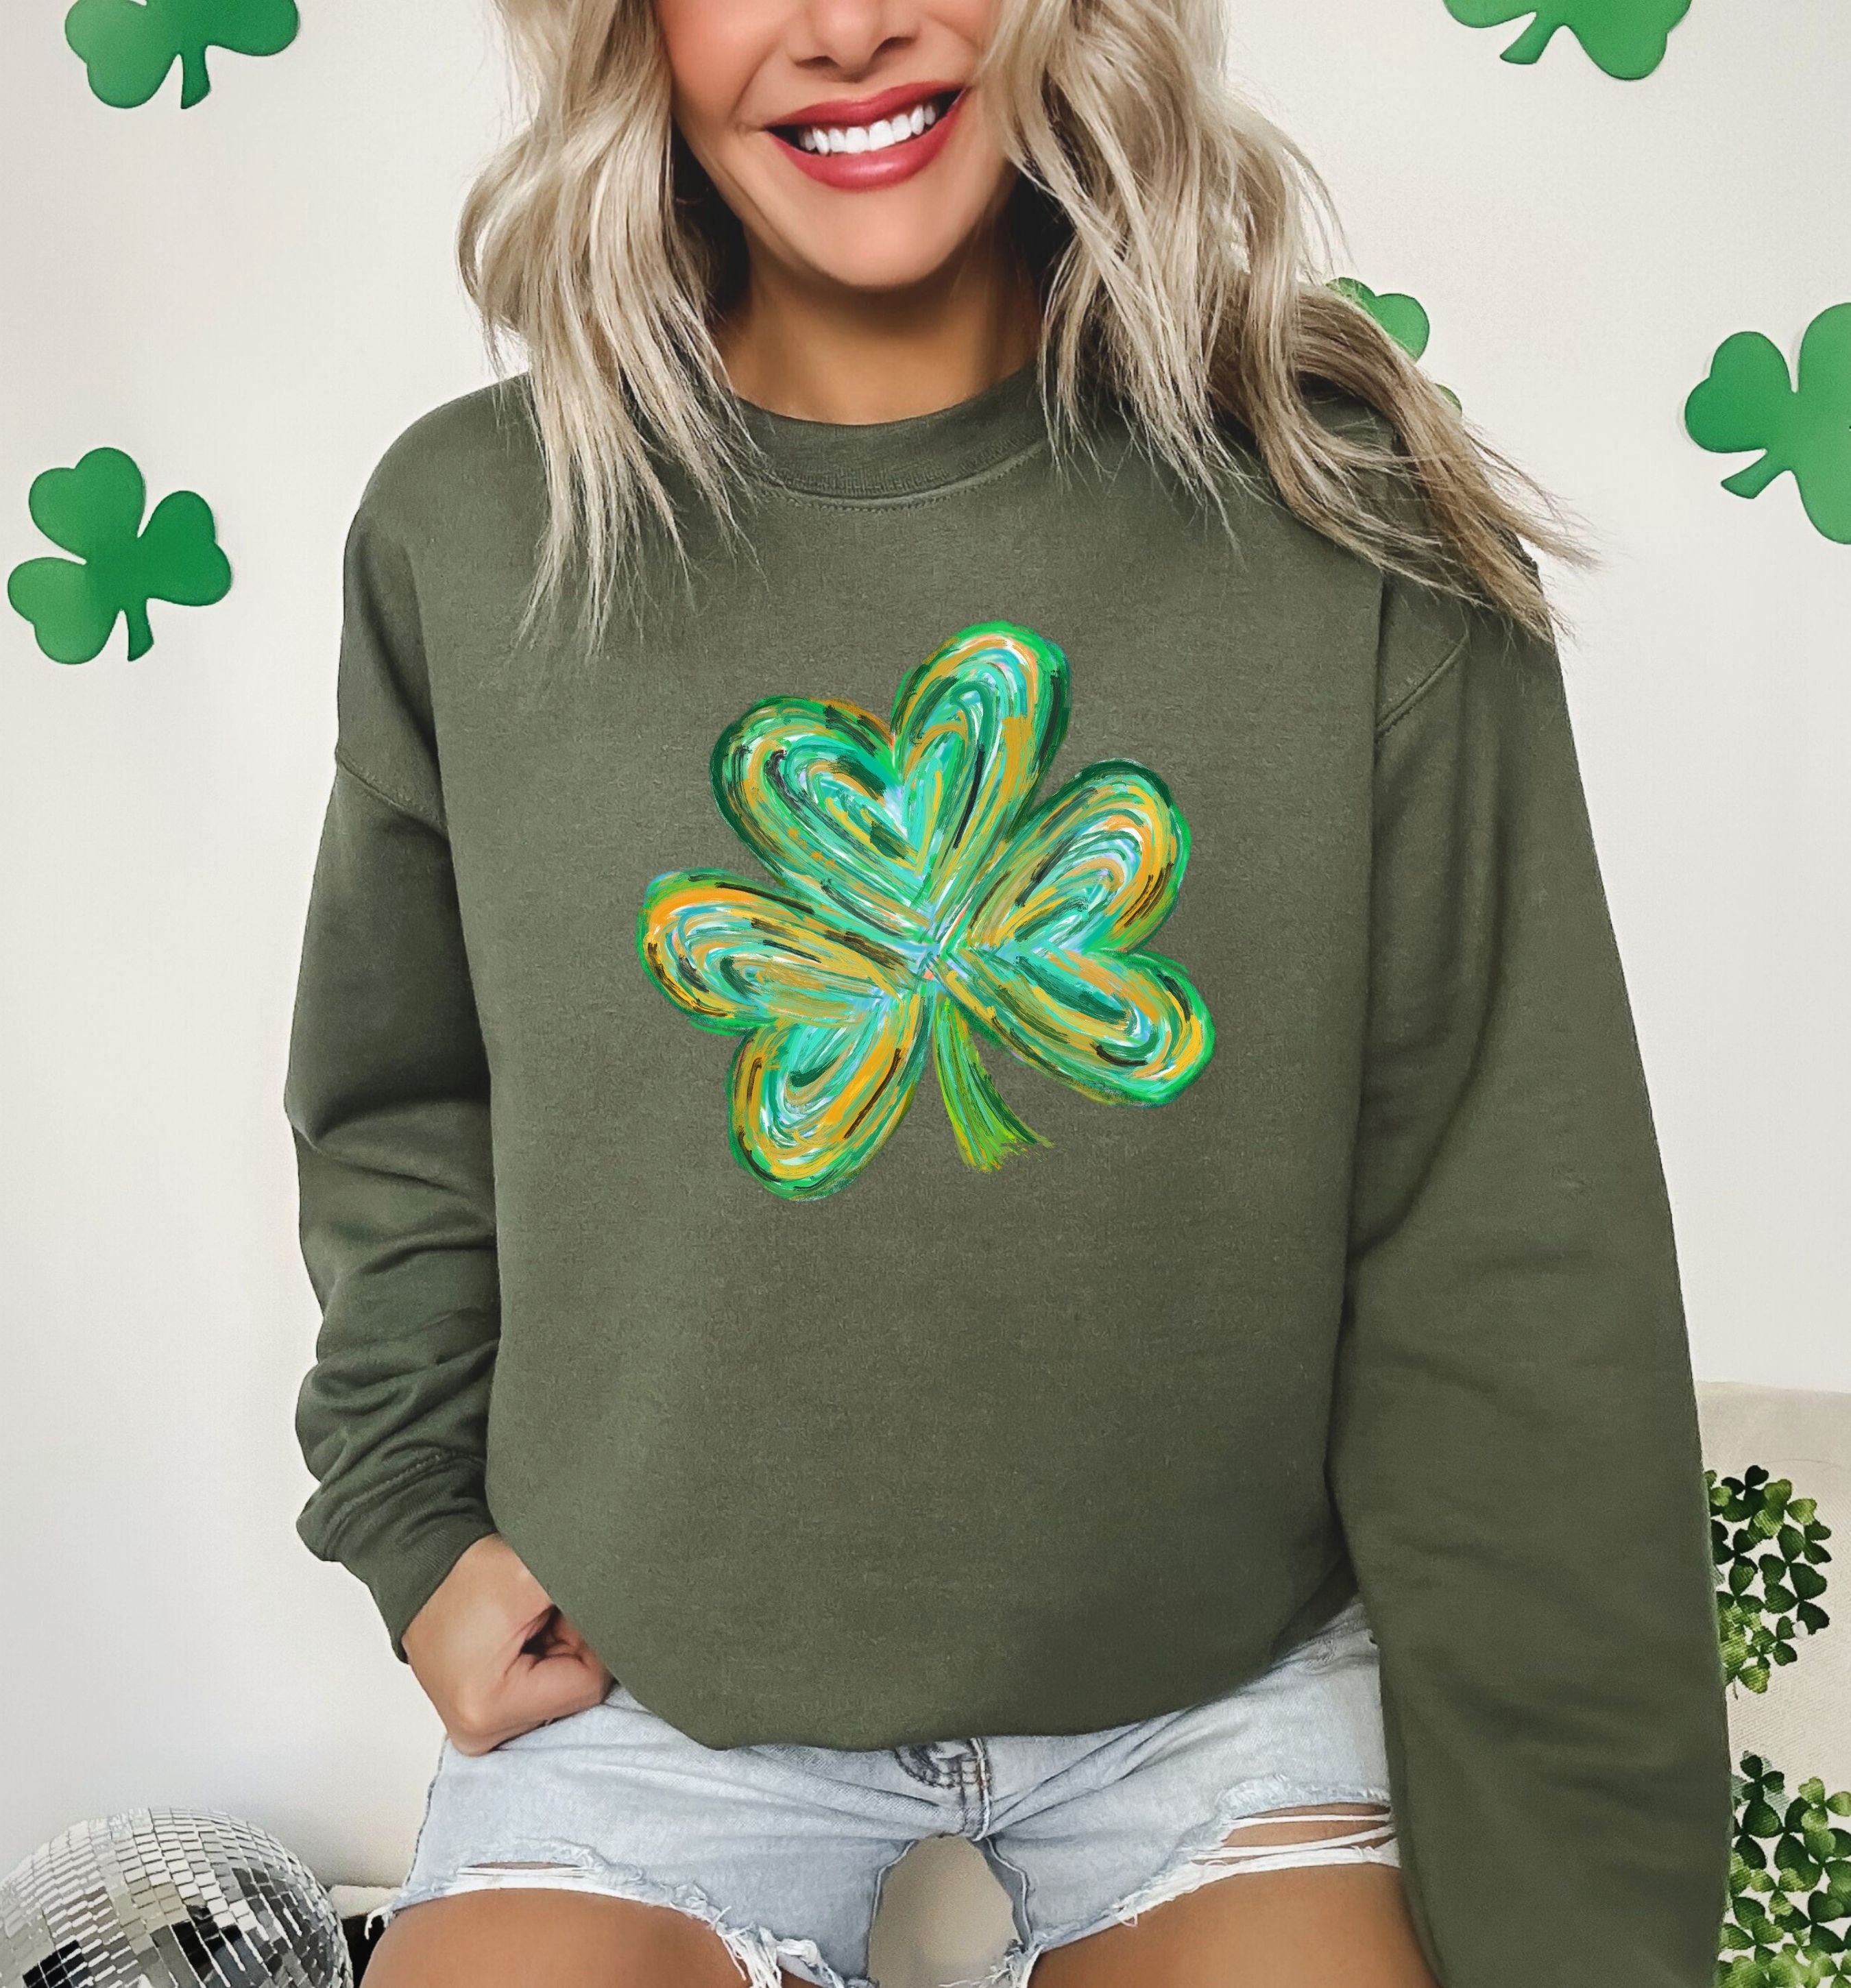 Cute St Patricks Four Leaf Clover Shirt